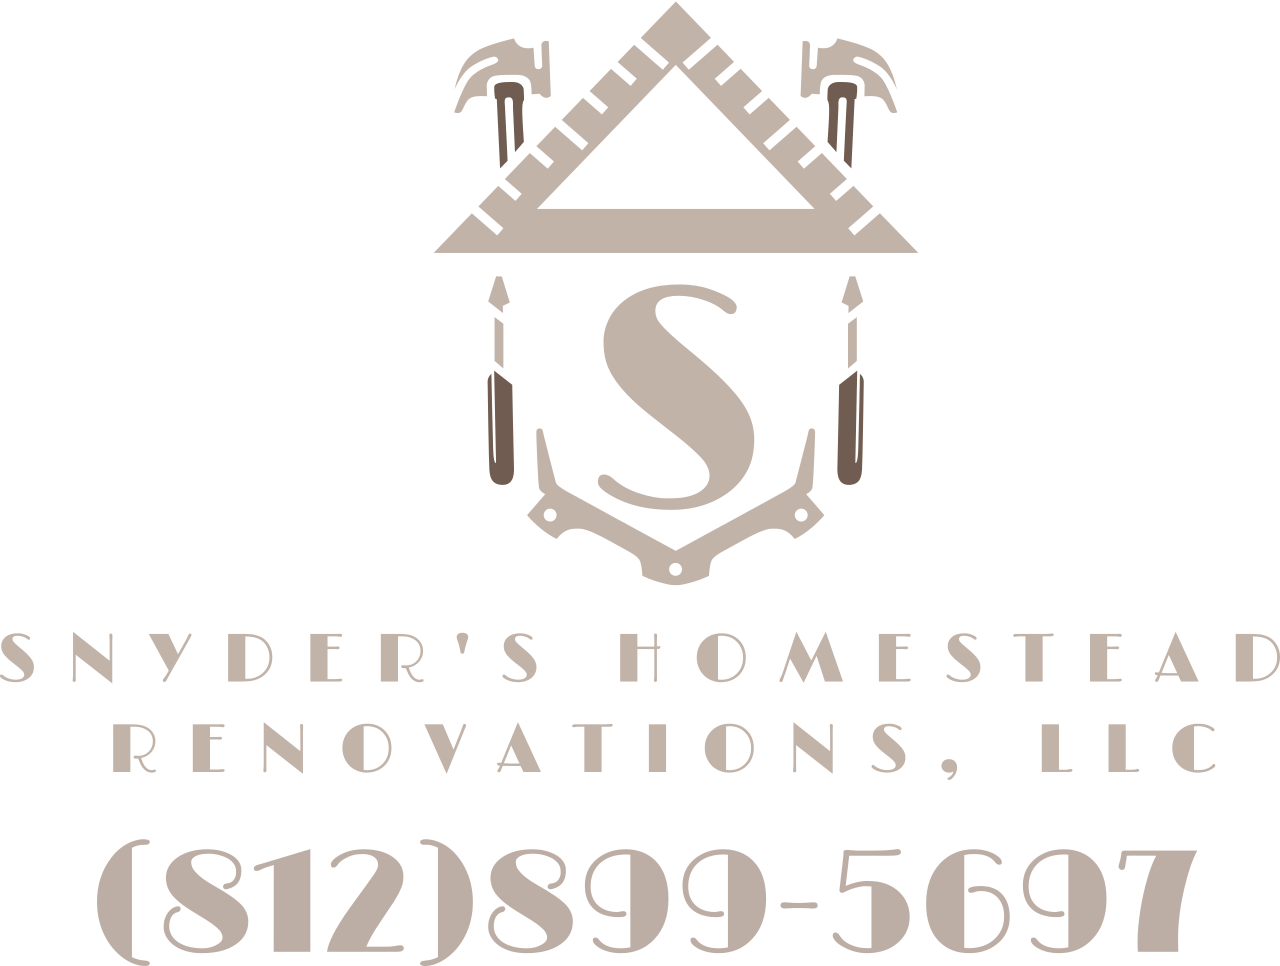 Snyder's Homestead 
Renovations, LLC's logo